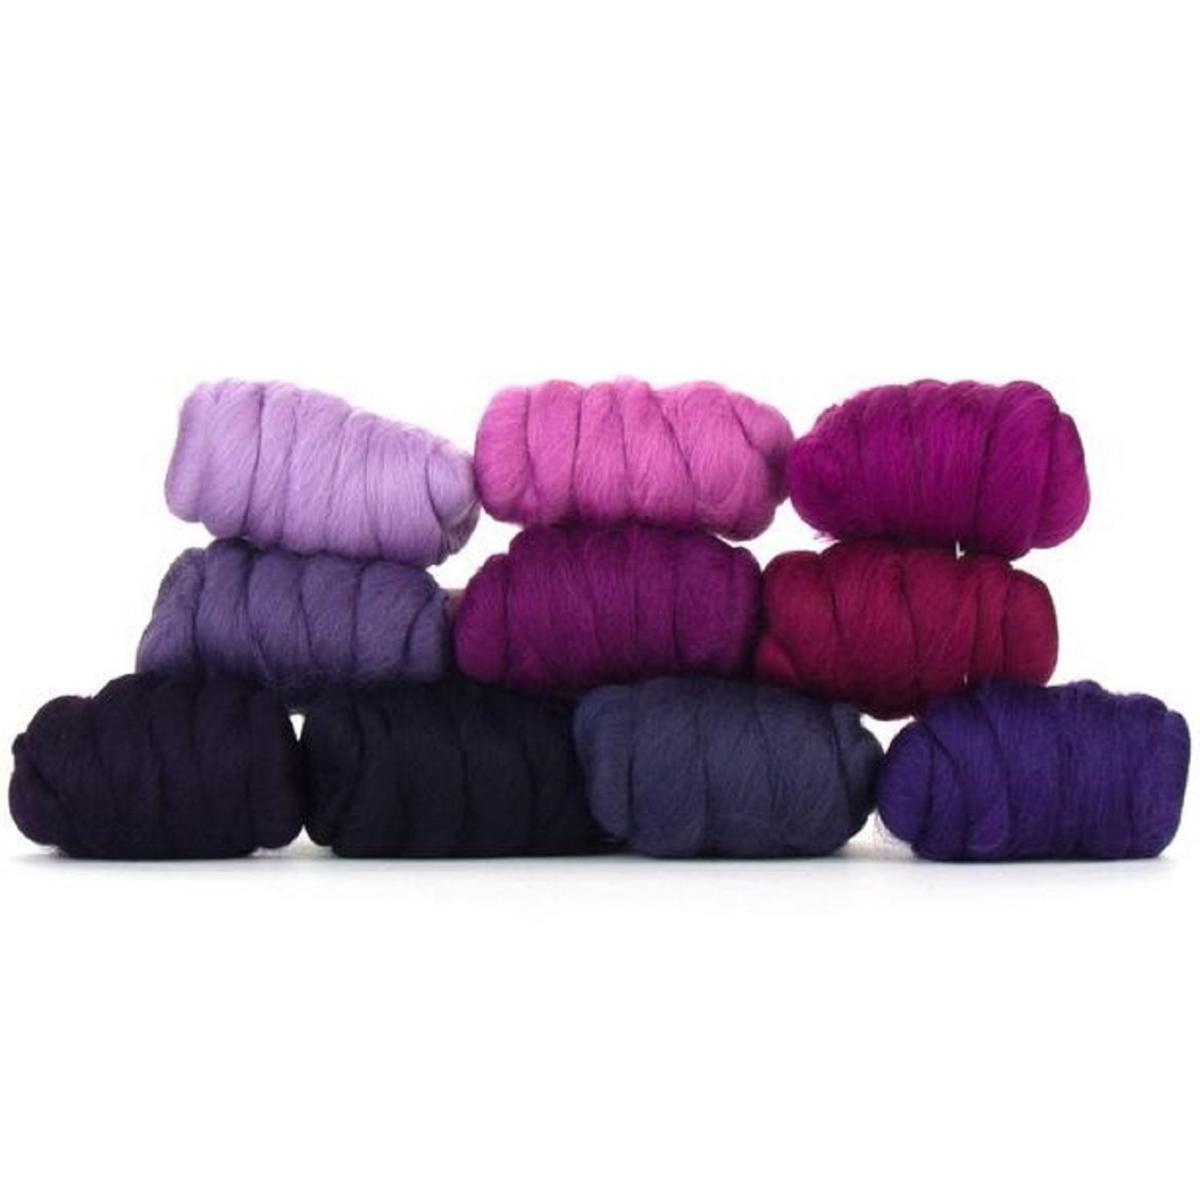 Mixed Merino Wool Variety Pack  Very Berry (Purples) 250 Grams